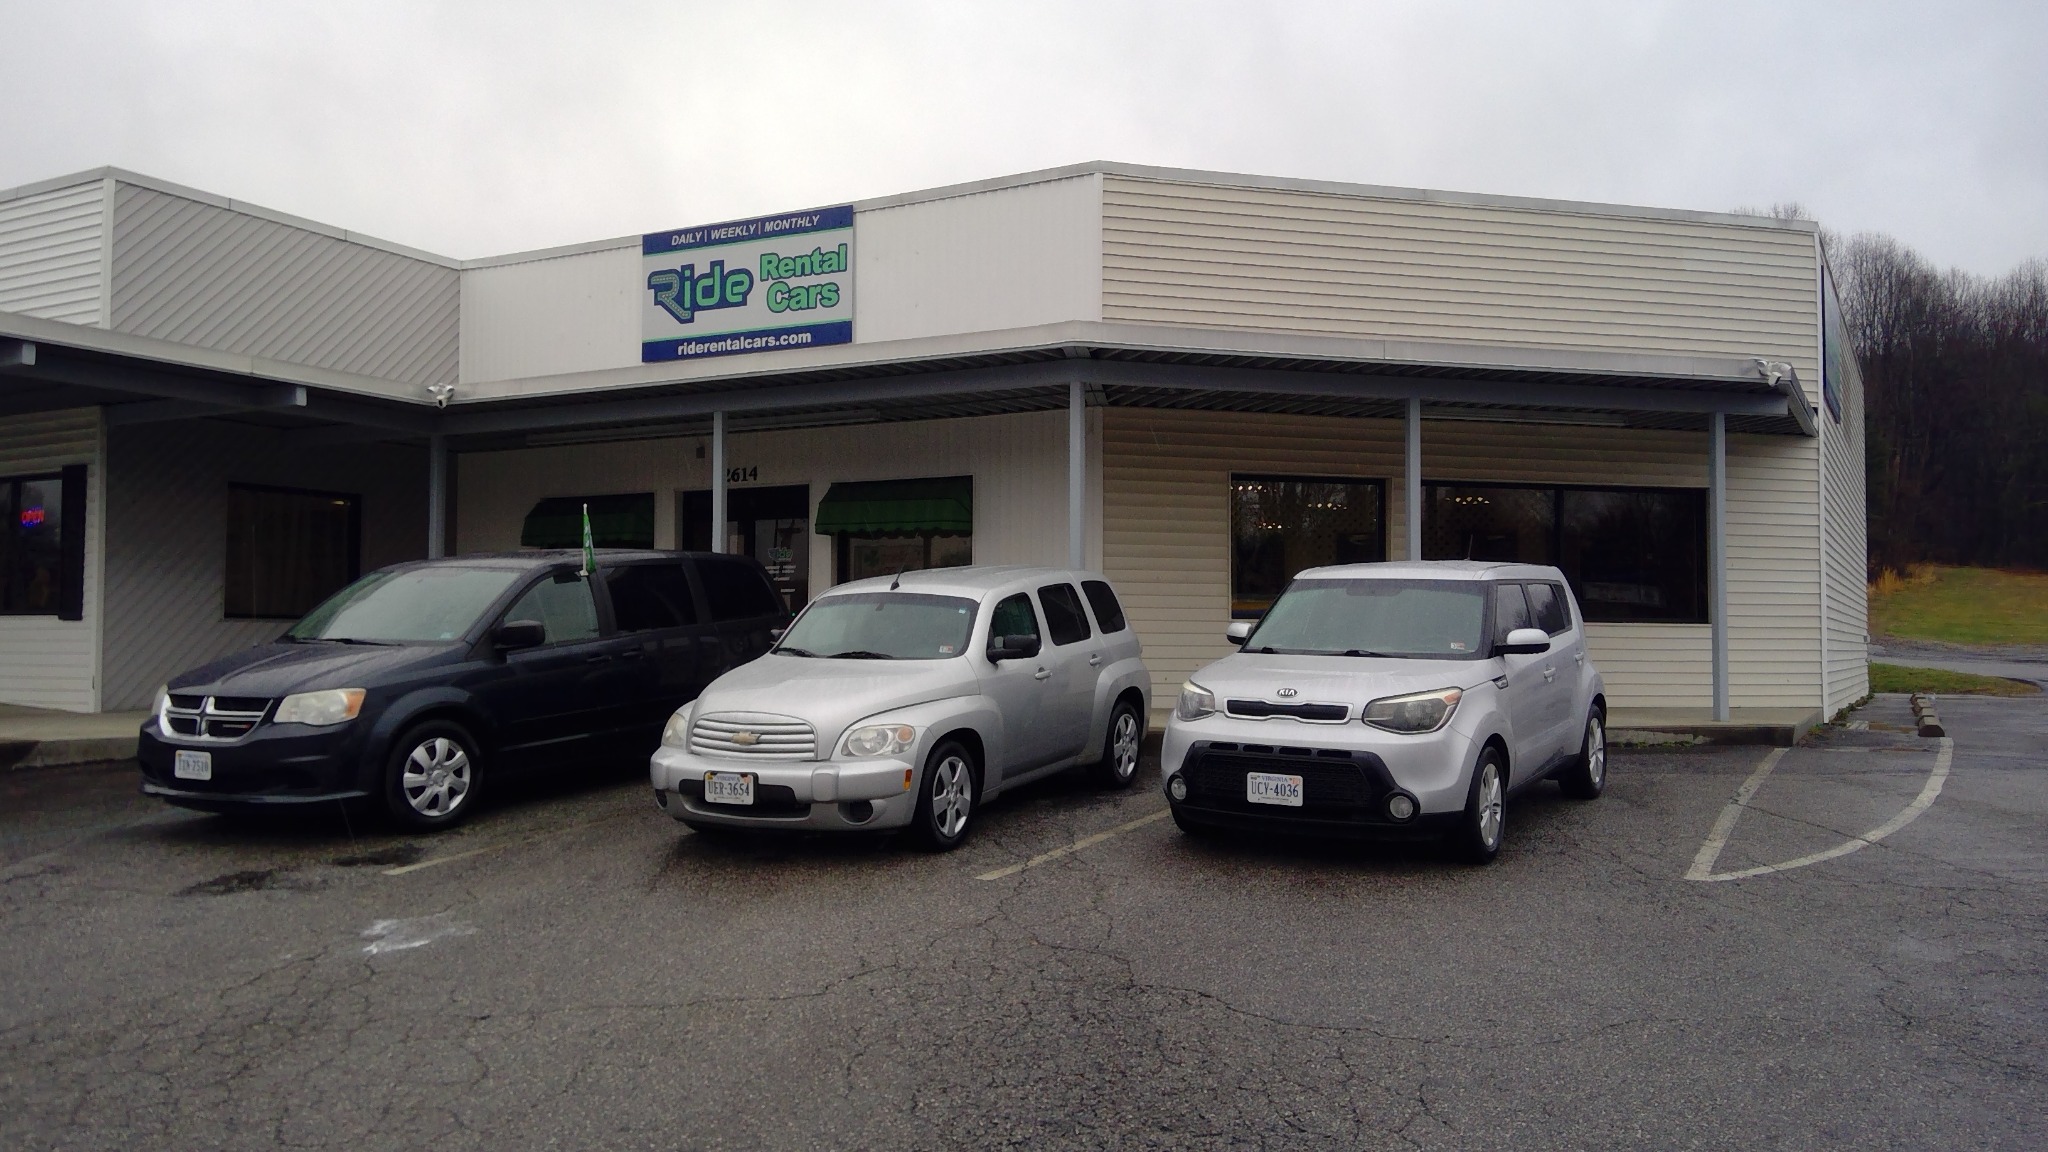 Competitive car rental in Collinsville, VA - Ride Rental Cars